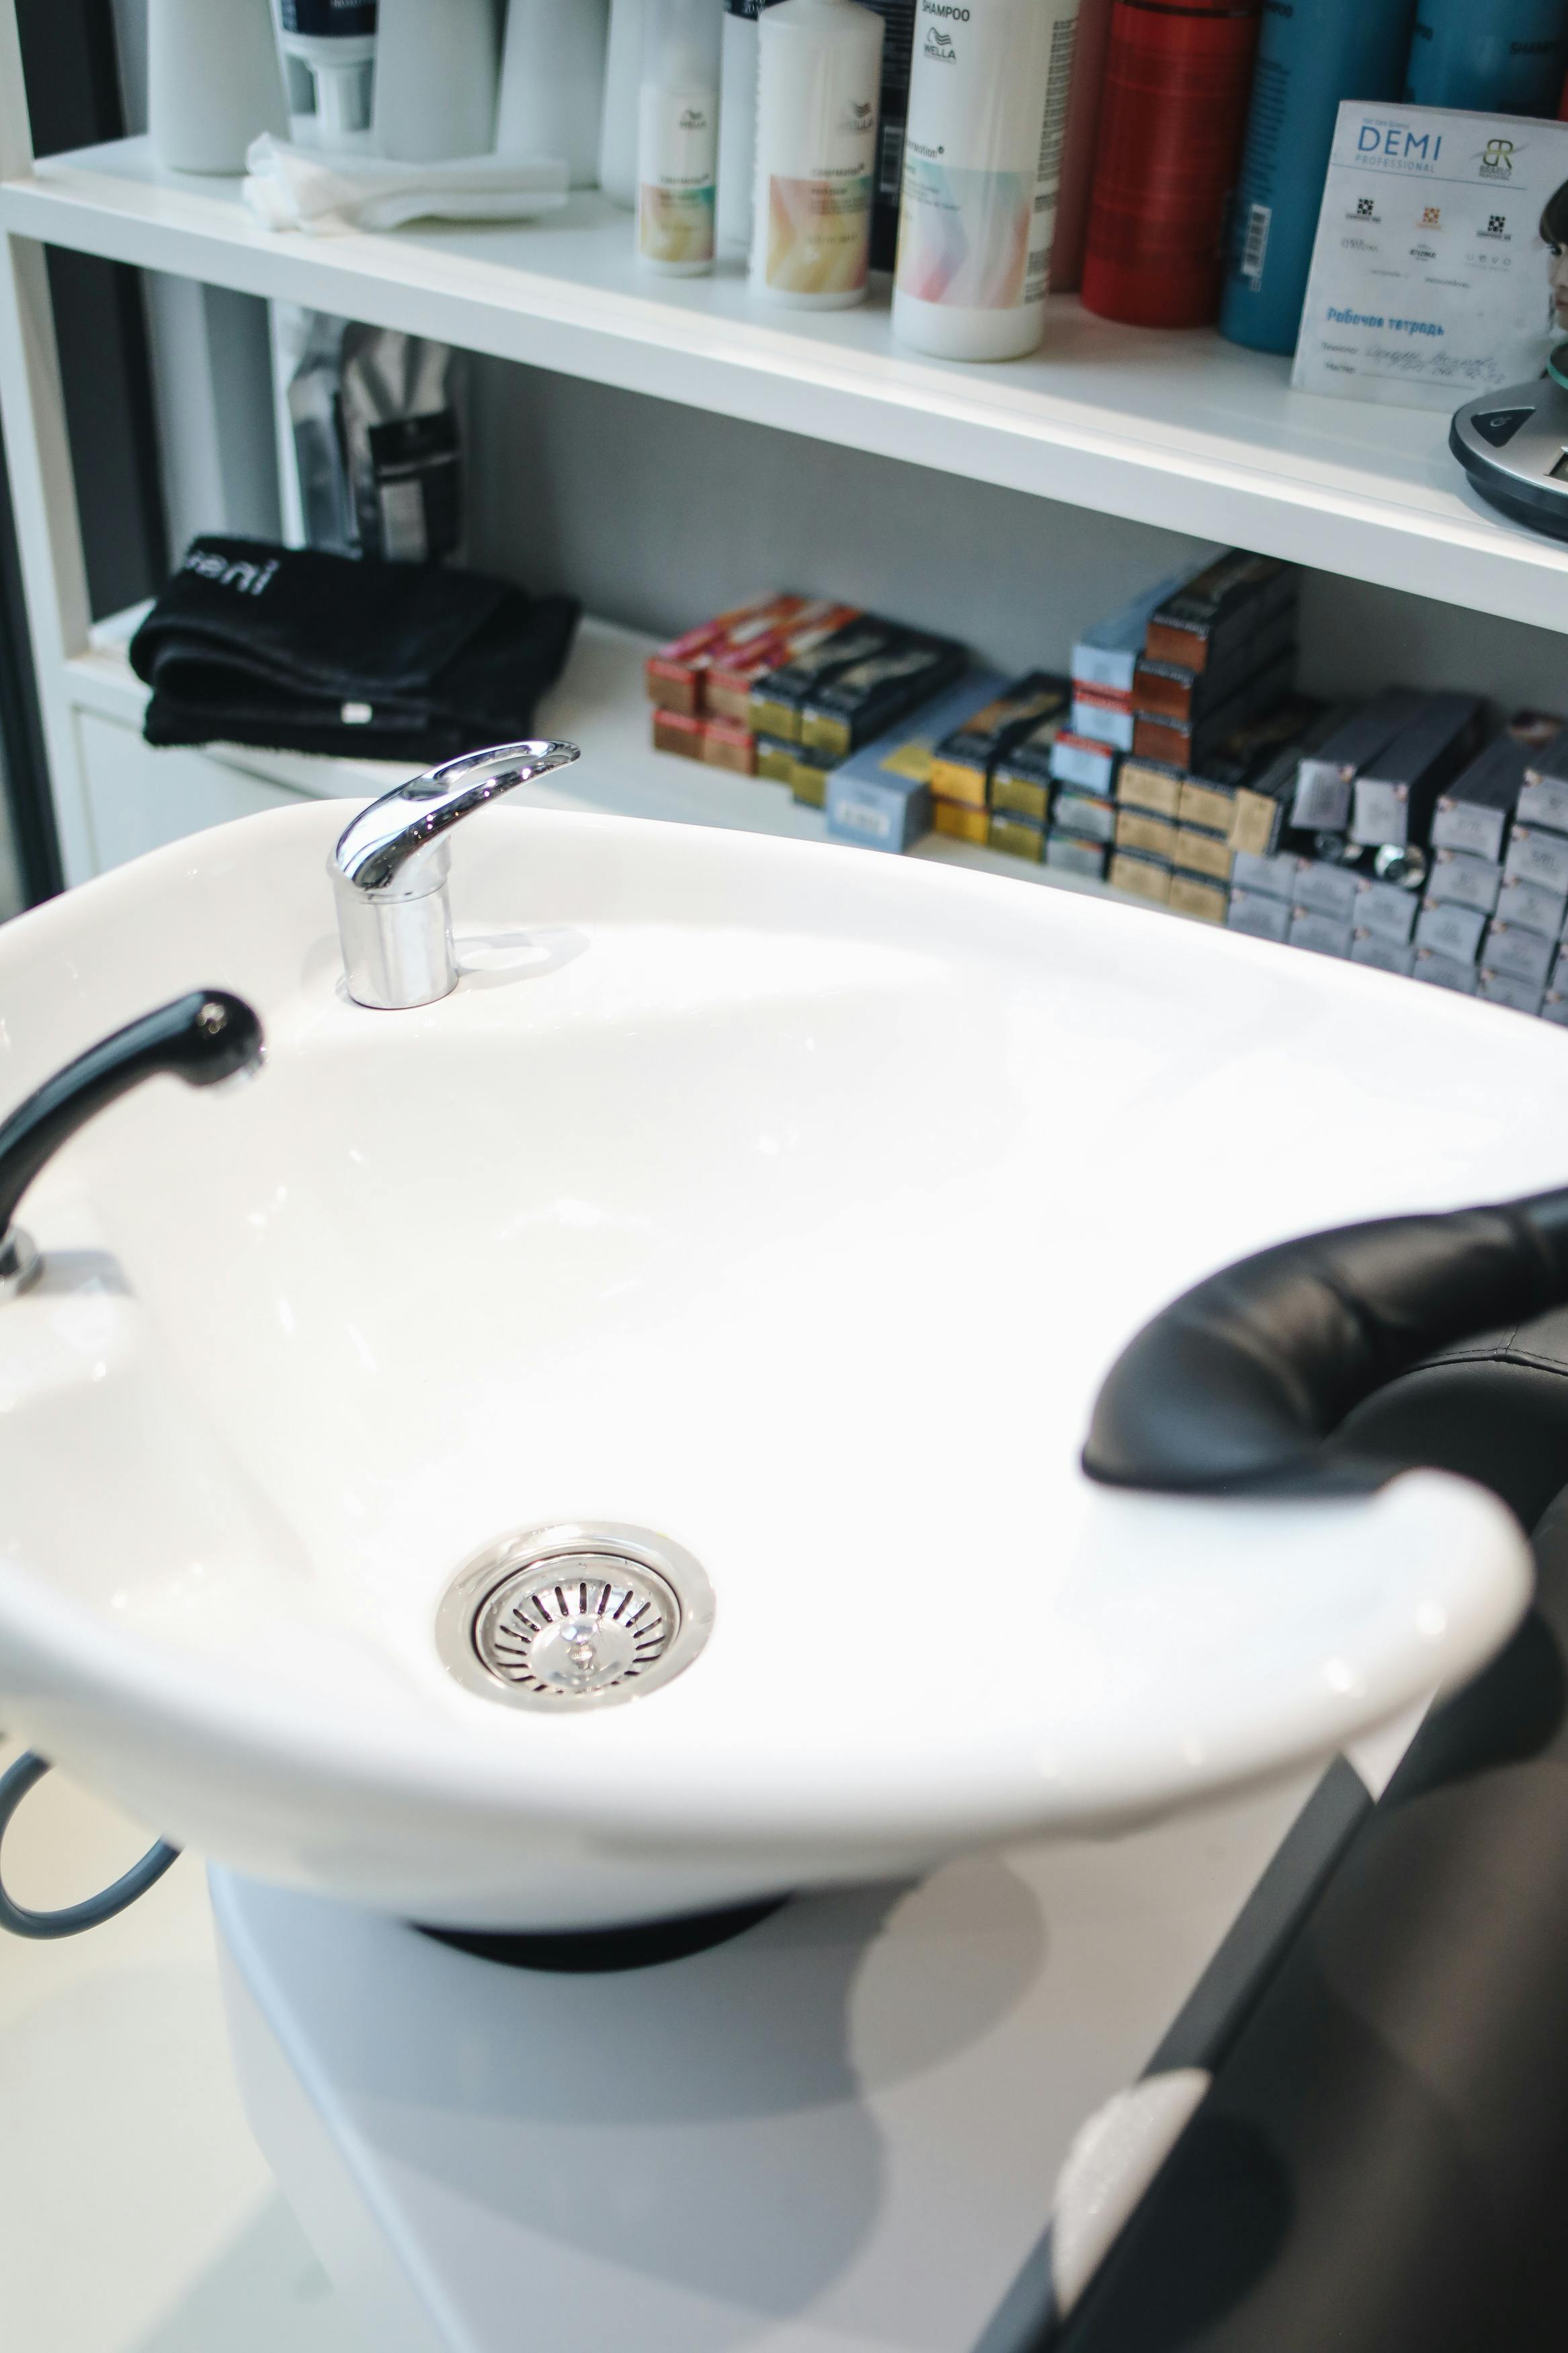 Ceramic Sink In Hair Salon Free Stock Photo